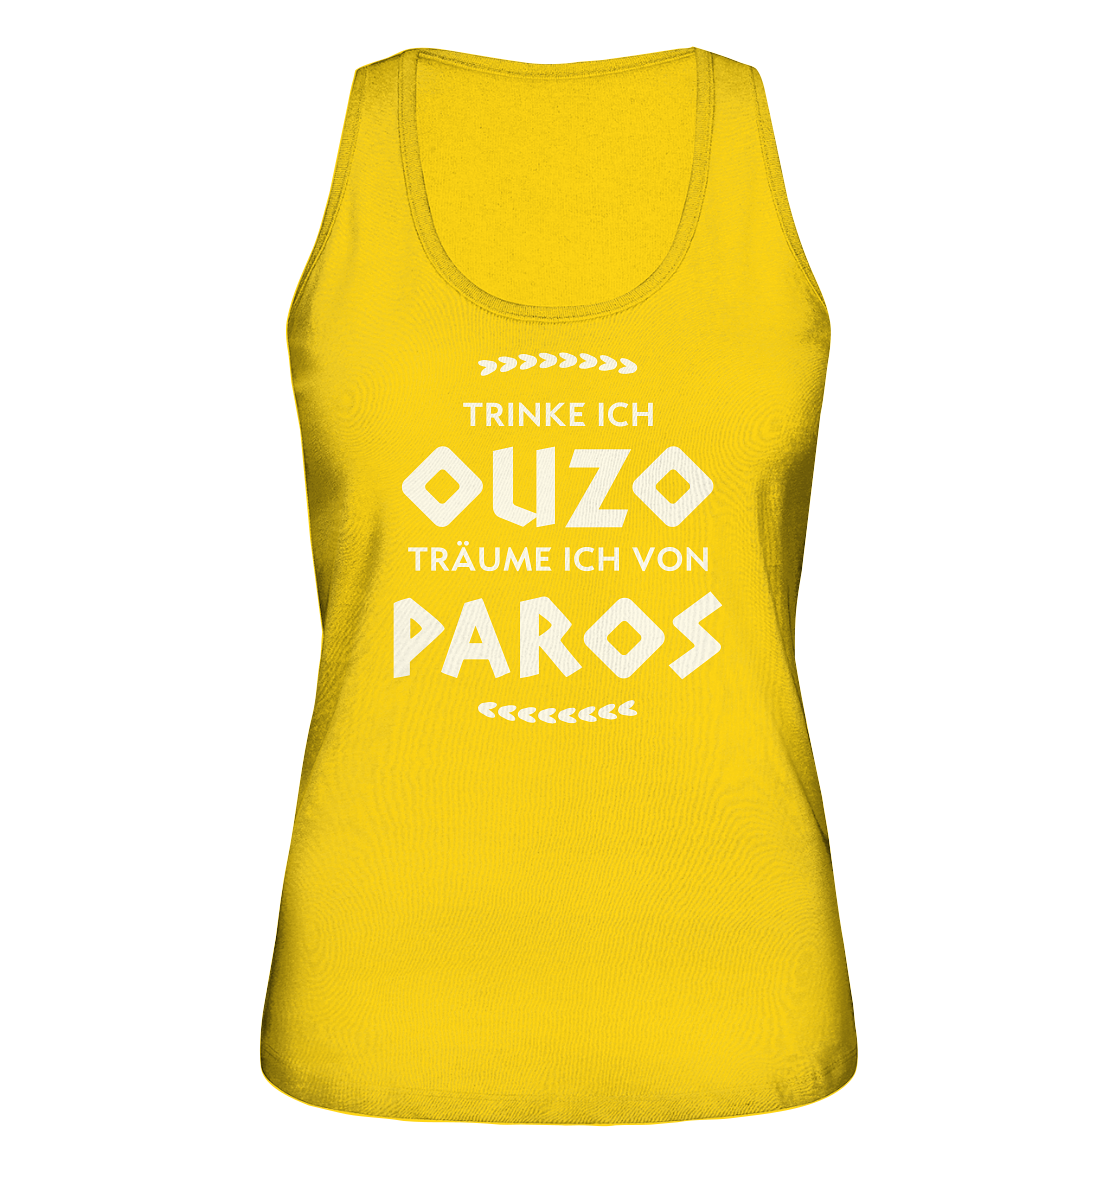 When I drink Ouzo I dream about Paros - Ladies Organic Tank Top